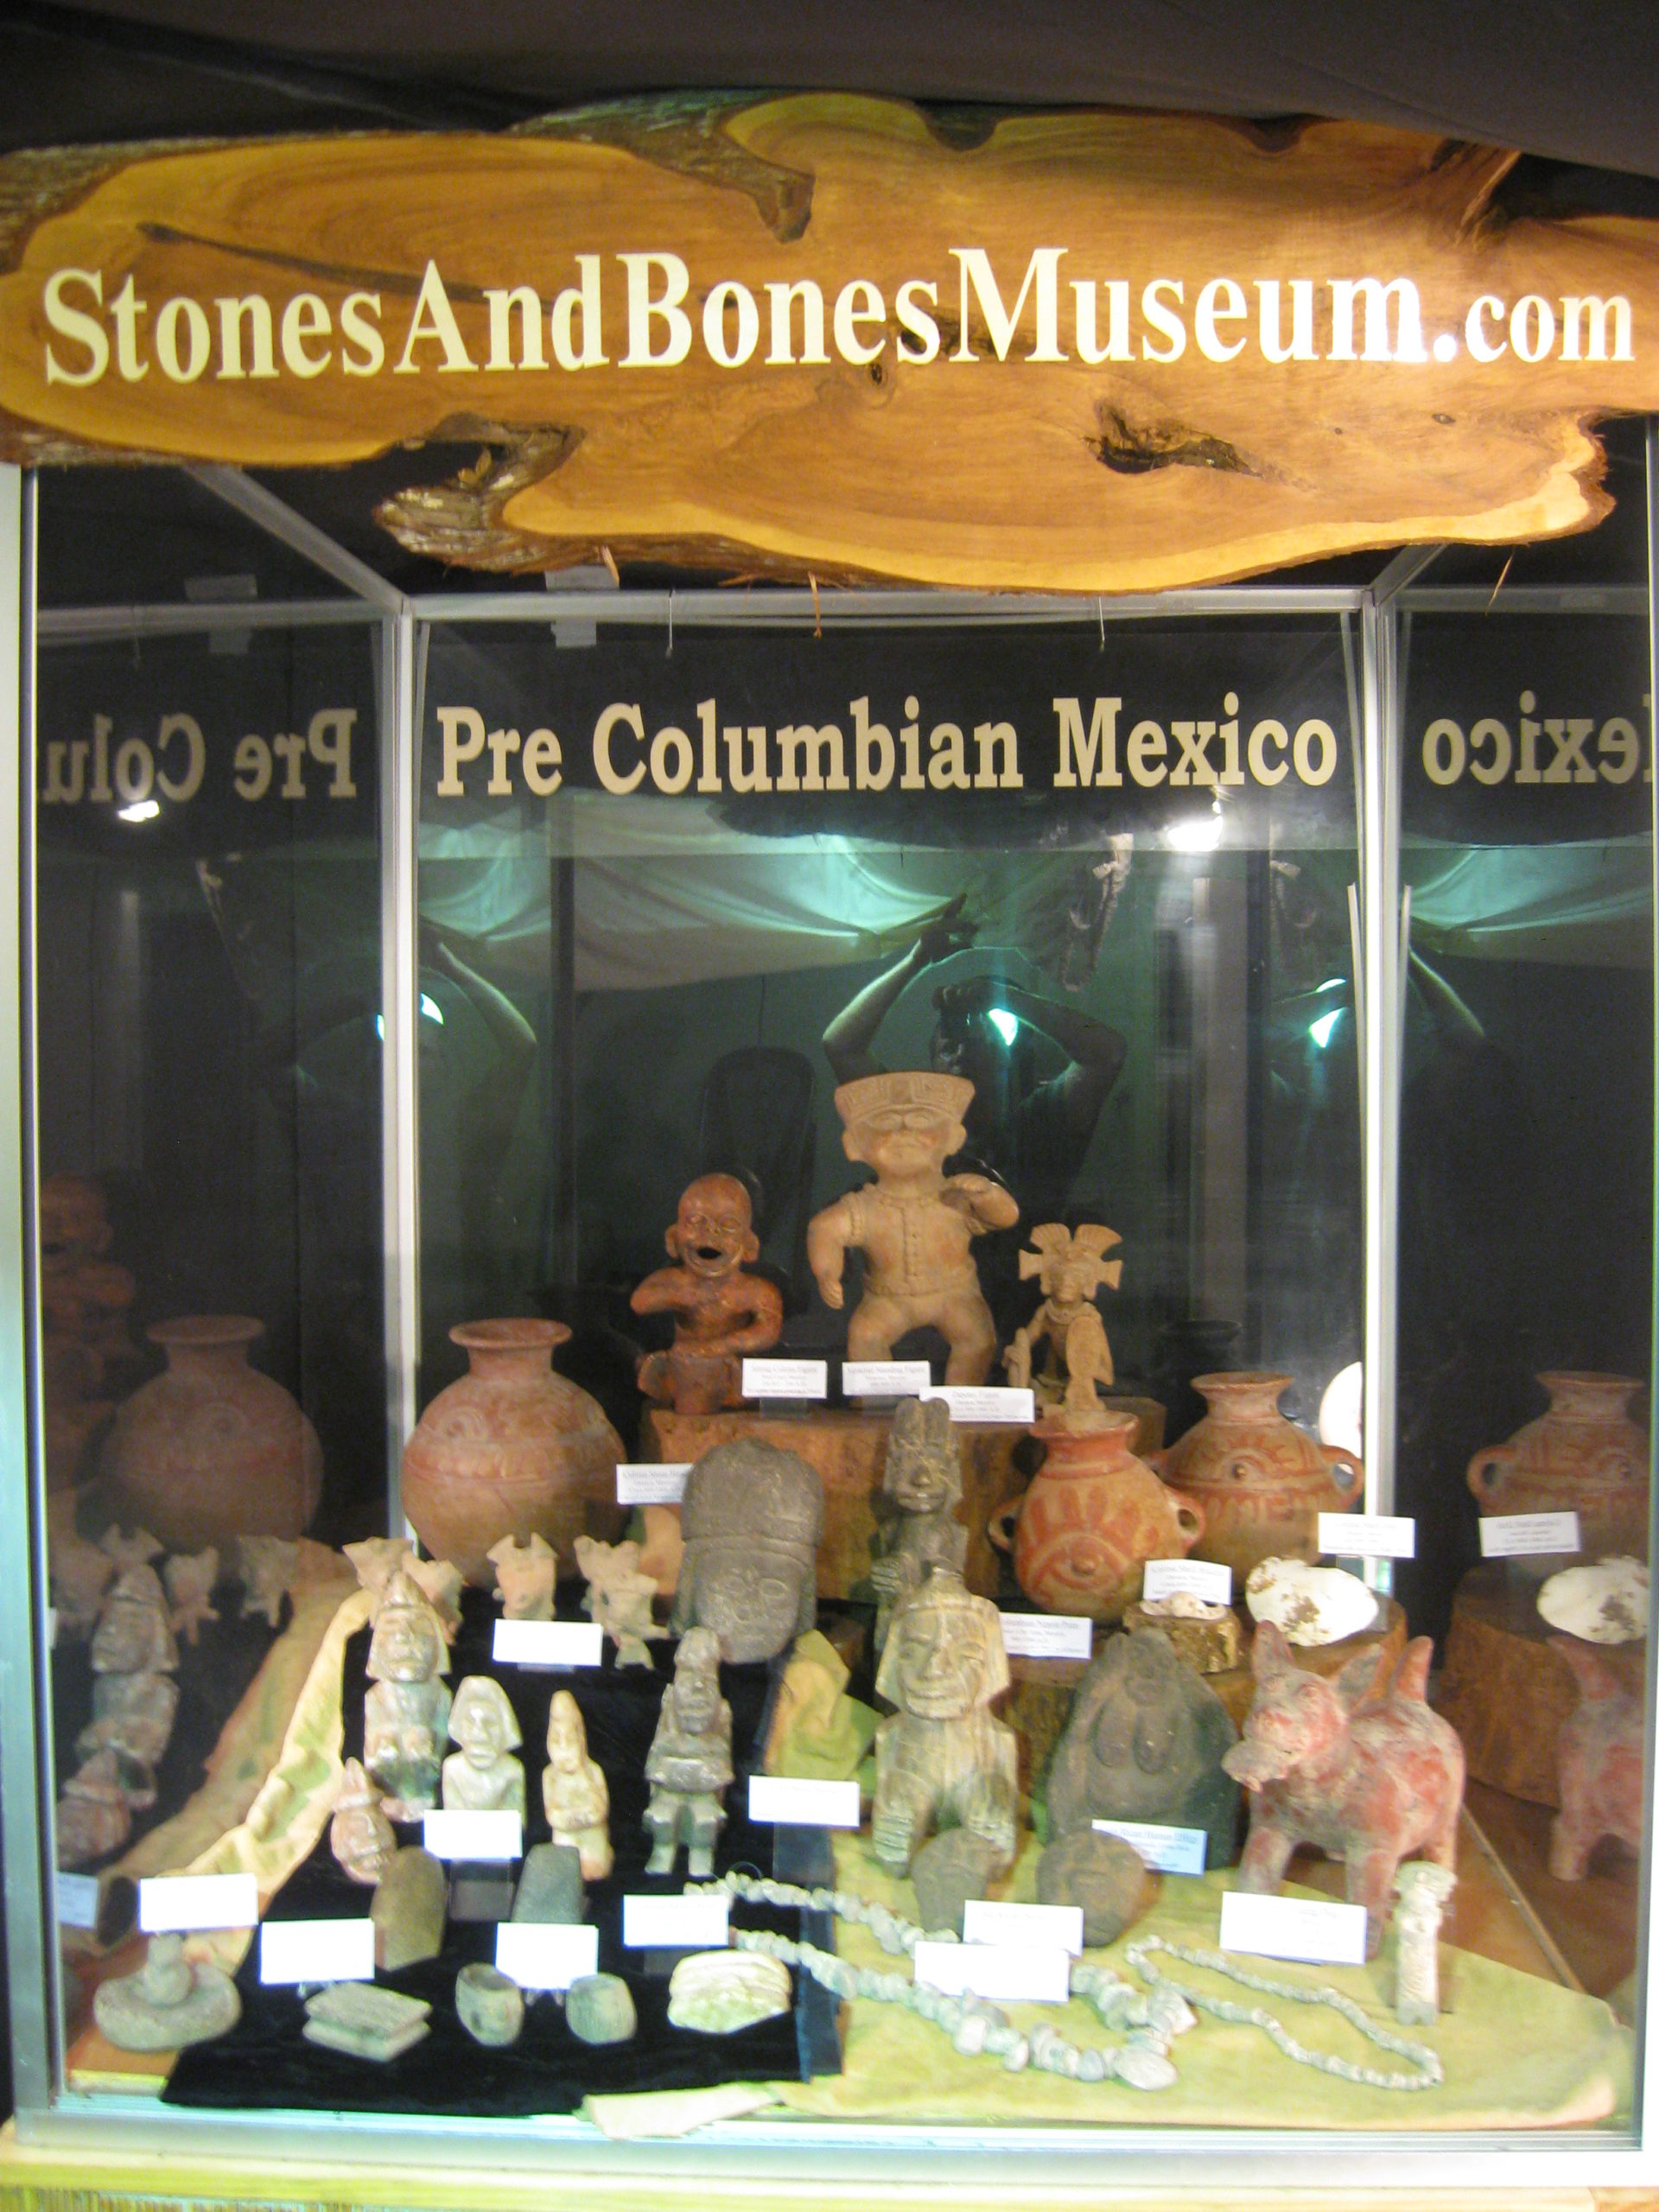 Pre Columbian Mexico